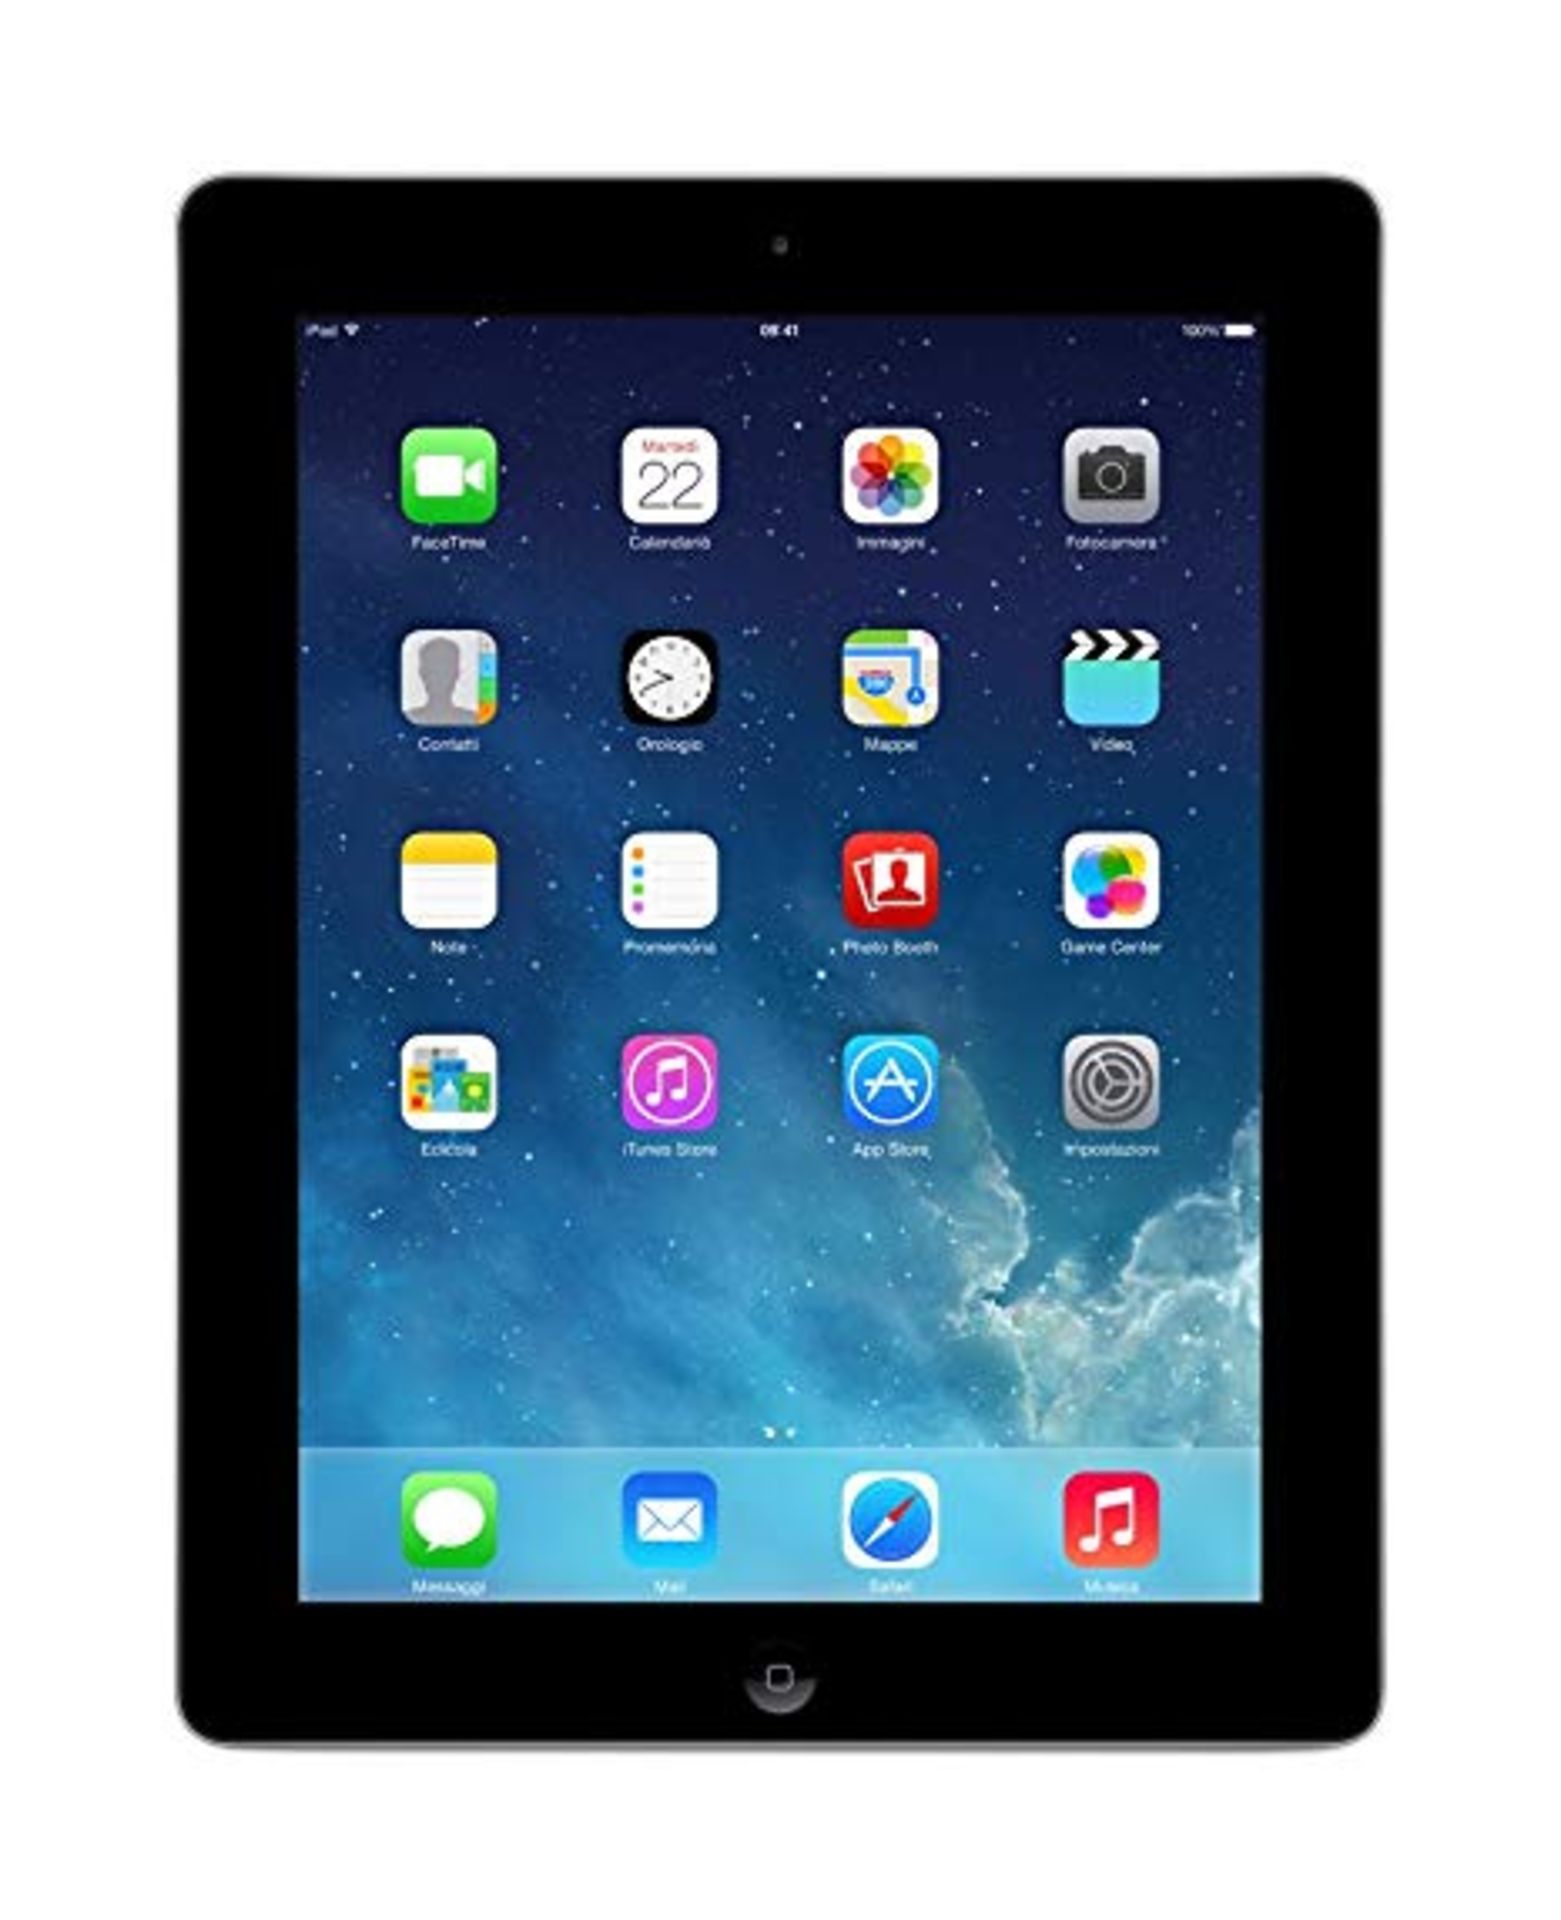 V Grade B Apple iPad 2 16GB WiFi Front And Rear Facing Cameras - Generic Box